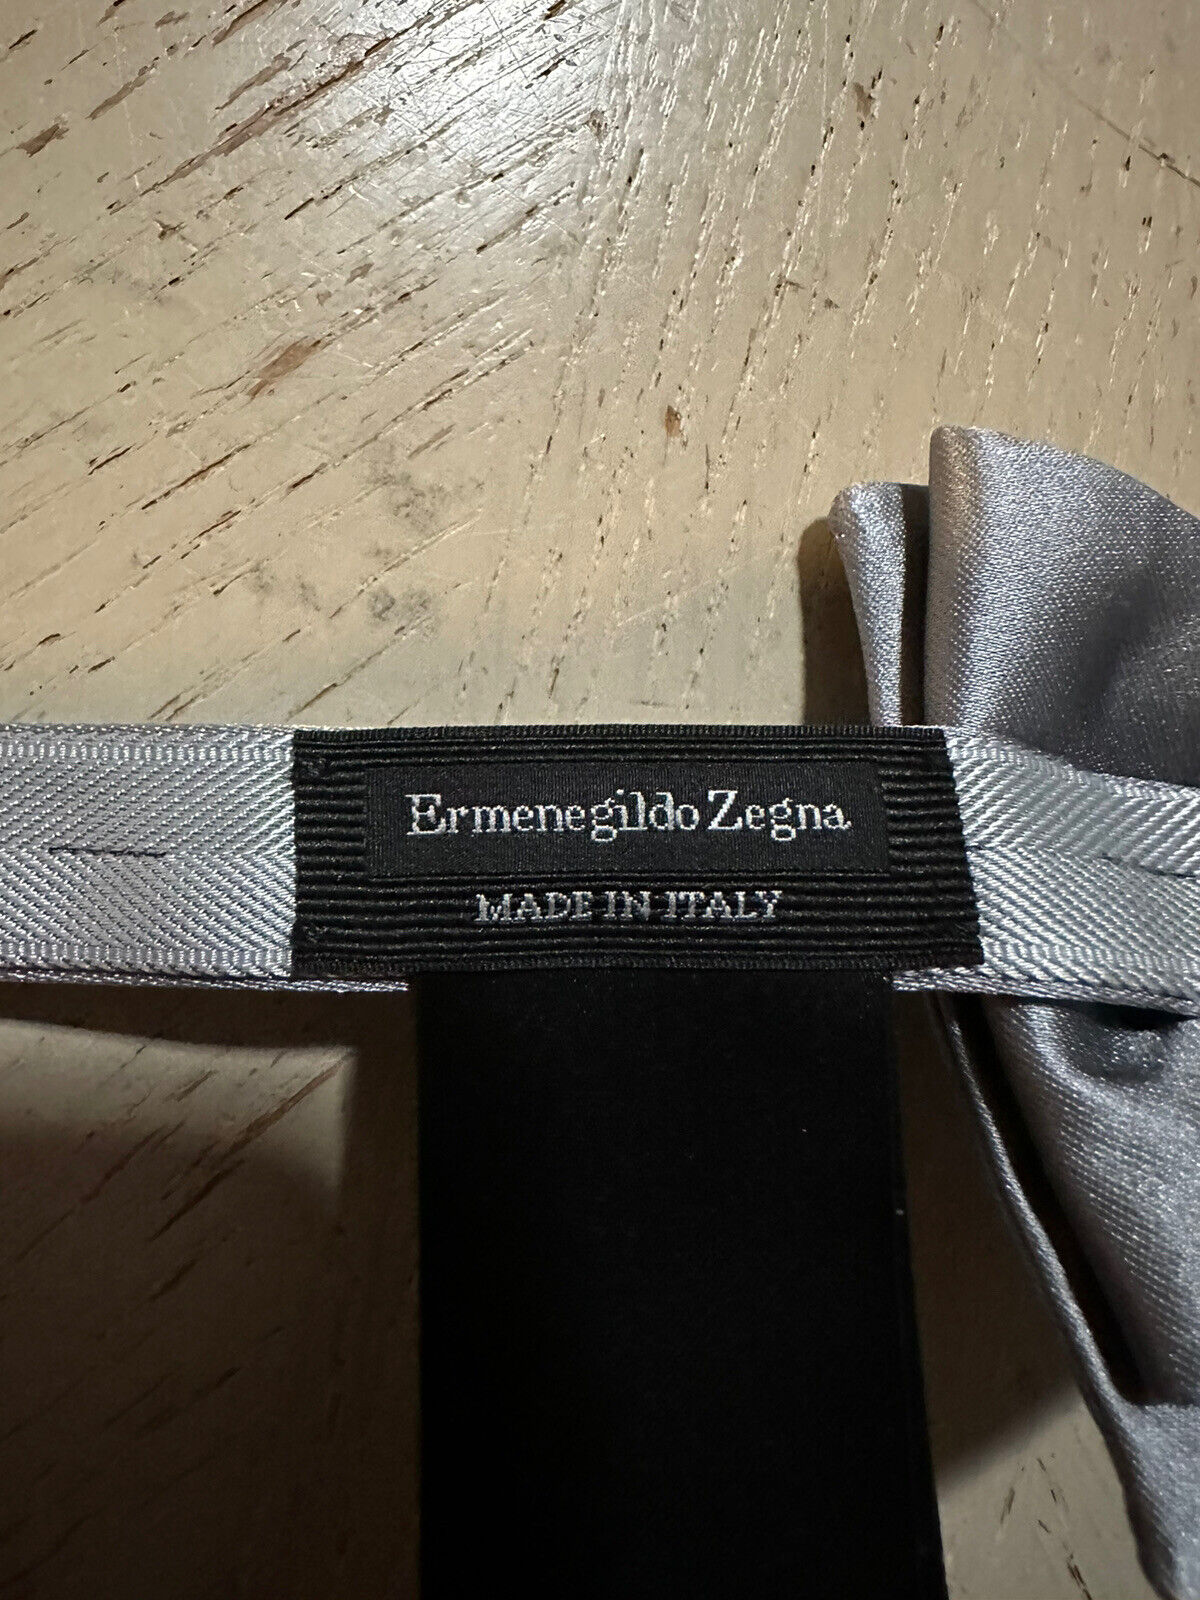 Neue Ermenegildo Zegna Seidenfliege Grau SLD Hergestellt in Italien